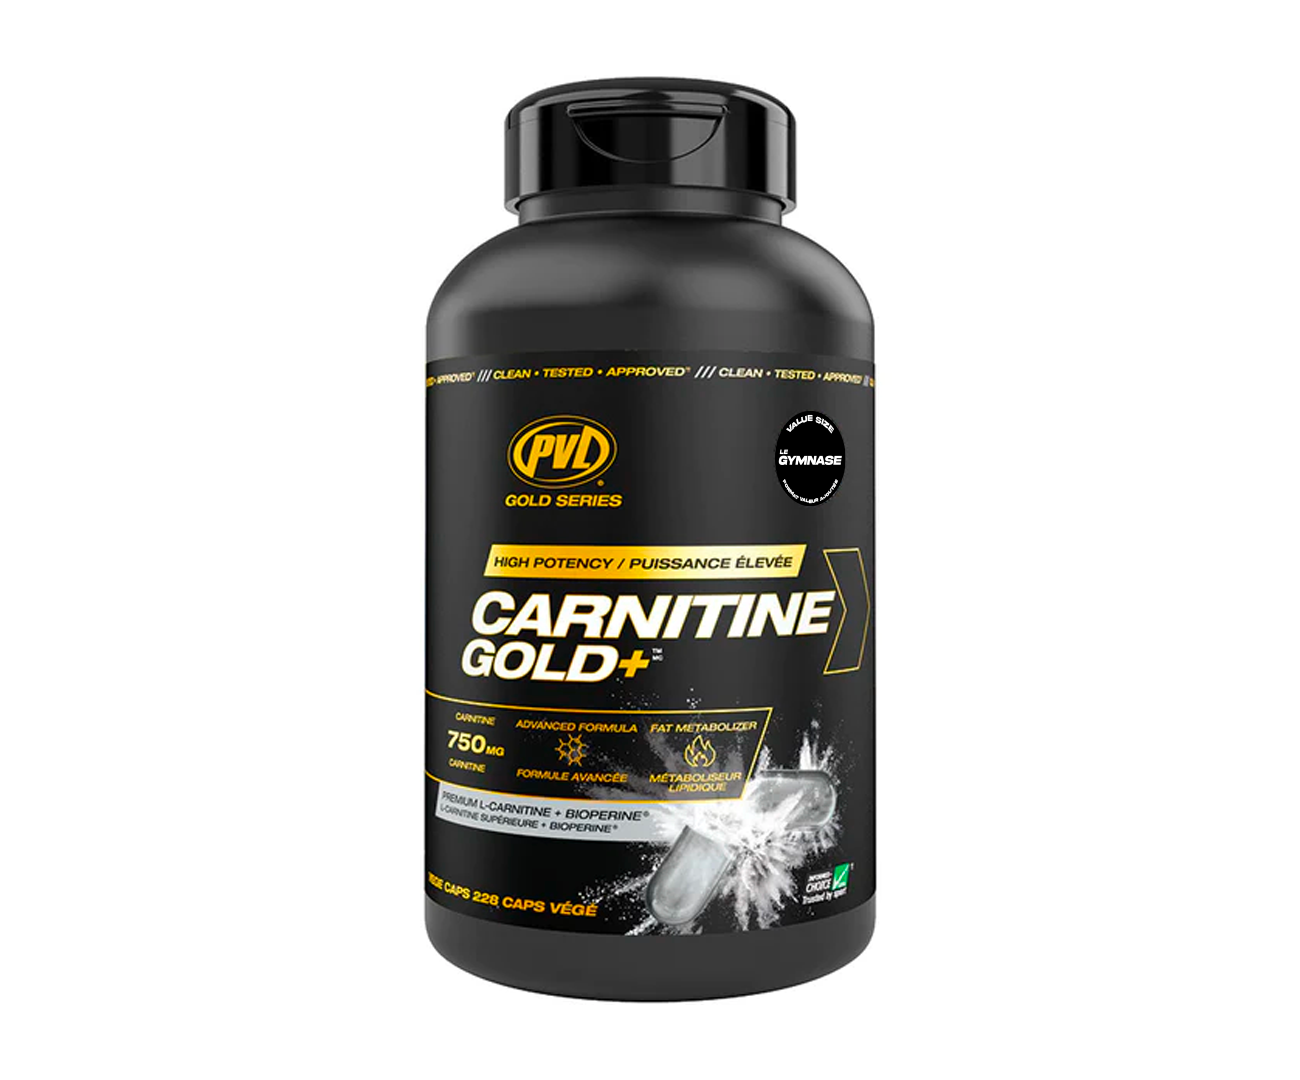 Carnitine Gold 228 caps